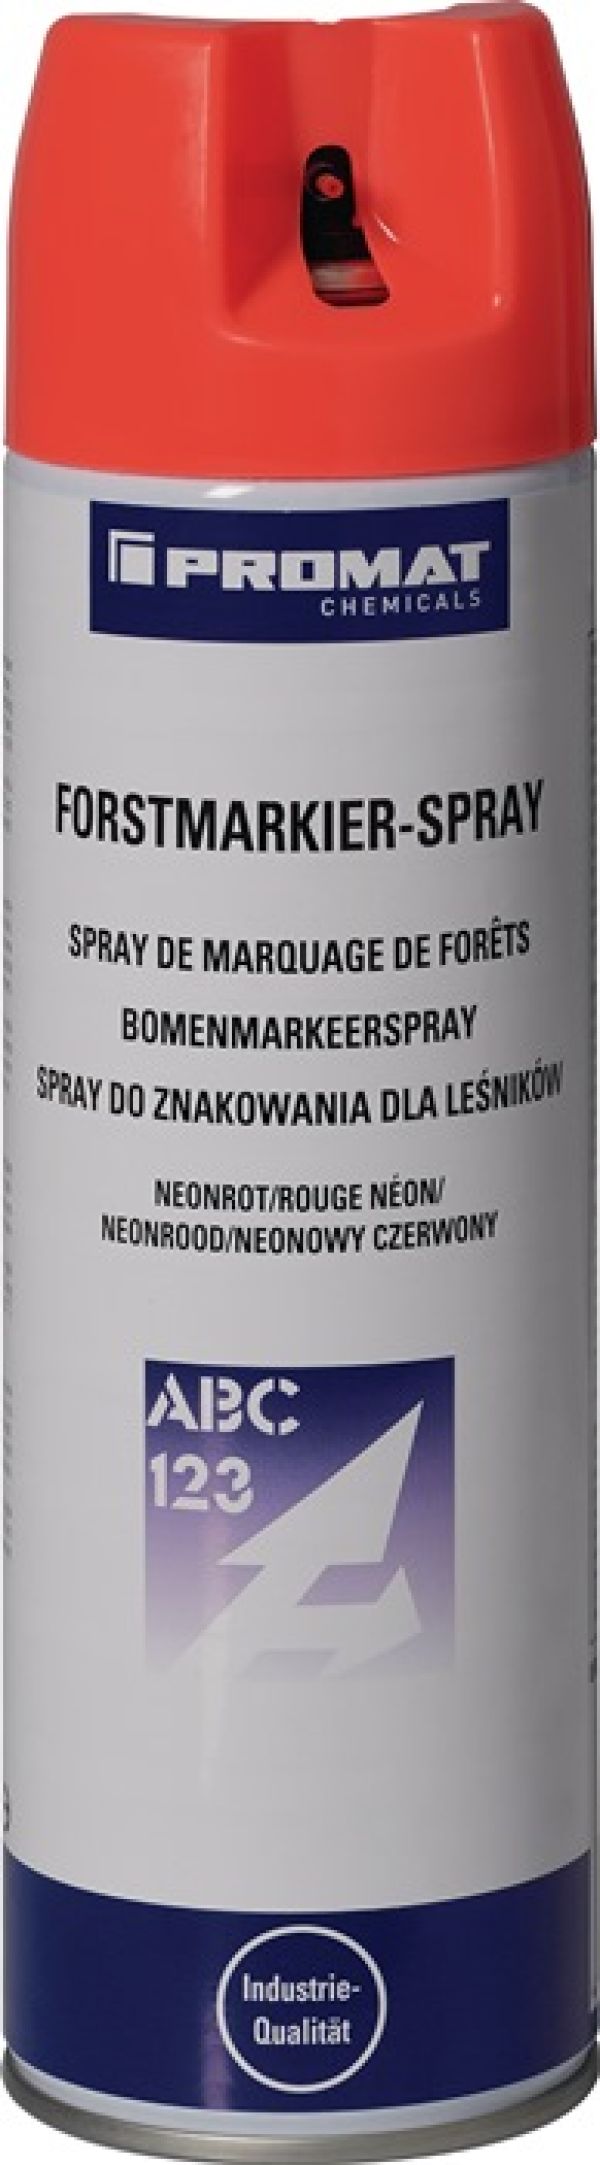 Forstmarkierspray PROMAT CHEMICALS